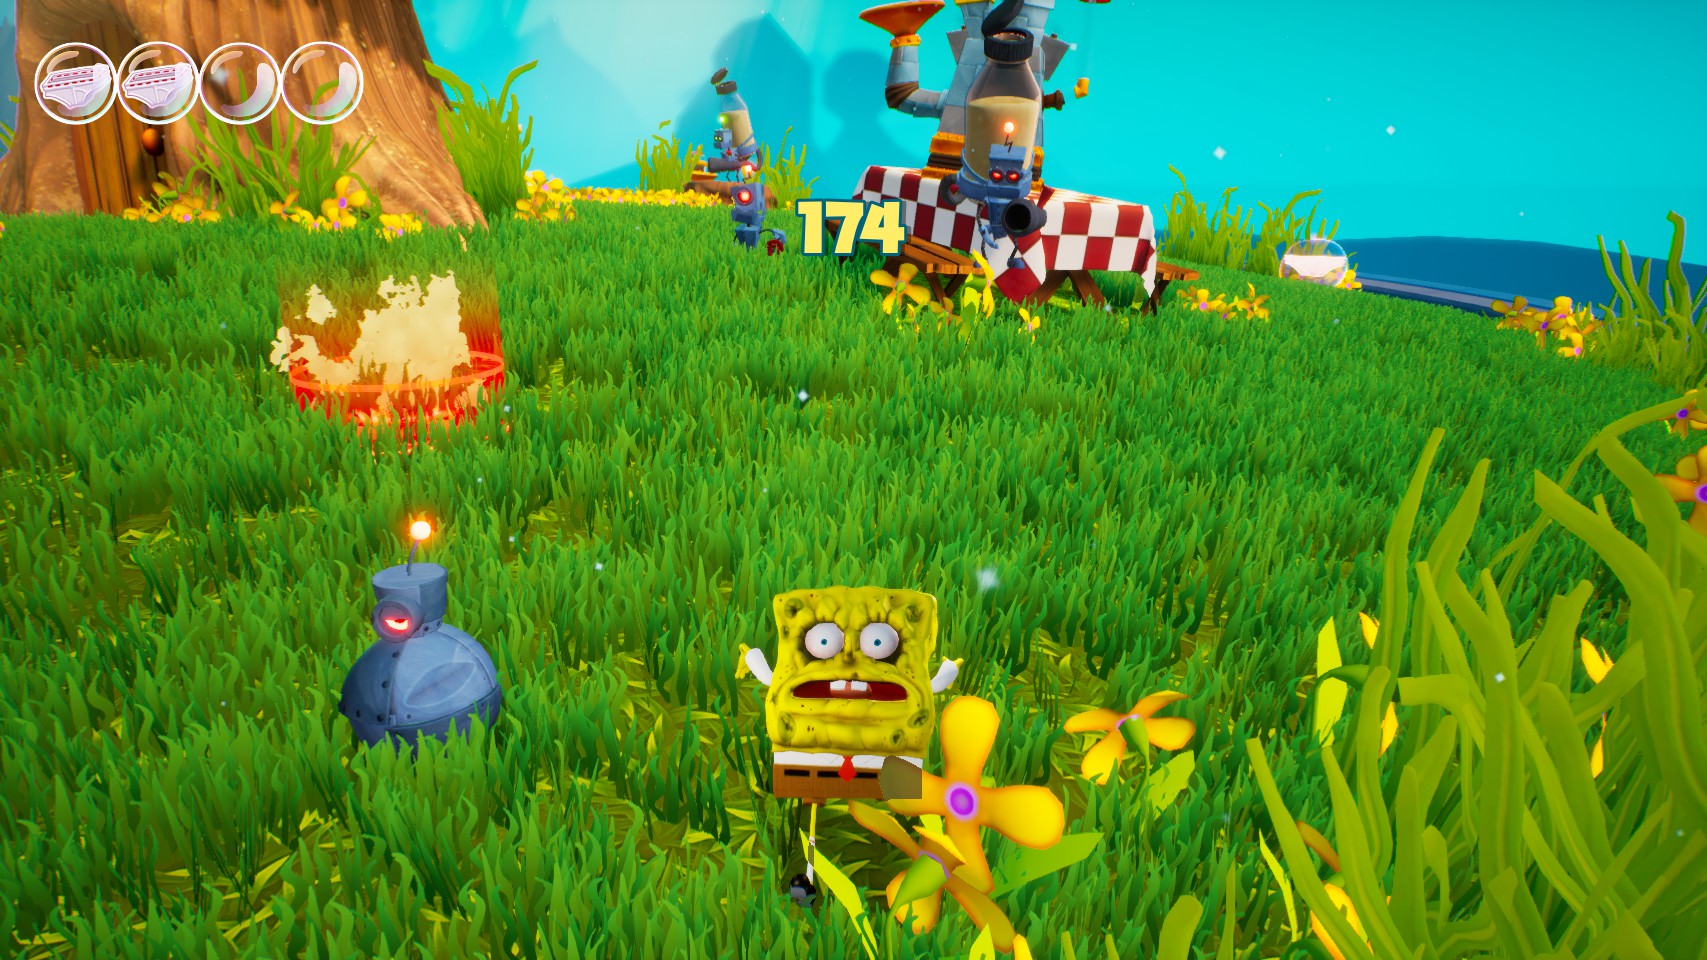 Spongebob's Battle for Bikini Bottom game was remastered. Is it fun to play?